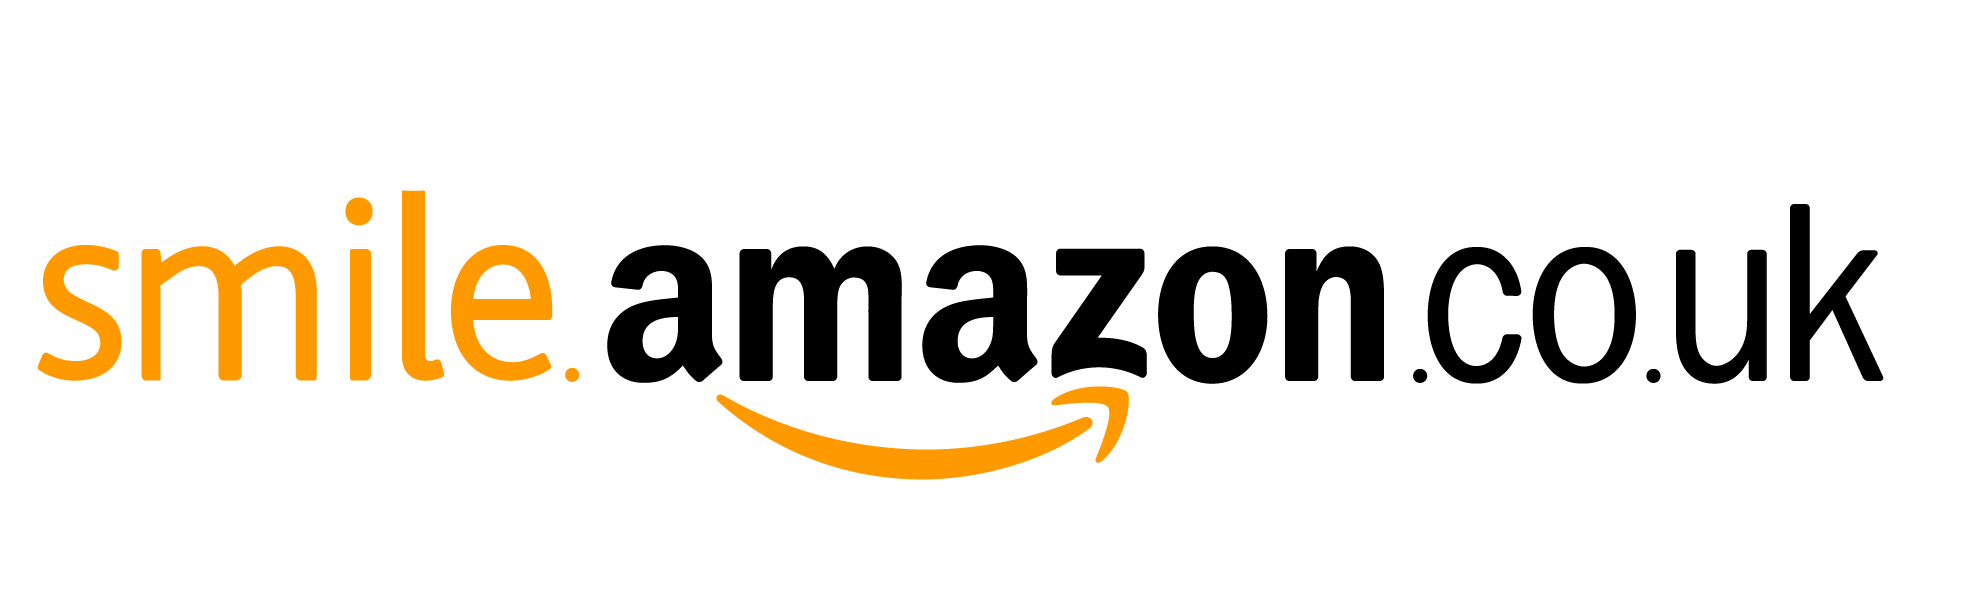 Amazon Smile Logo PNG Free Image